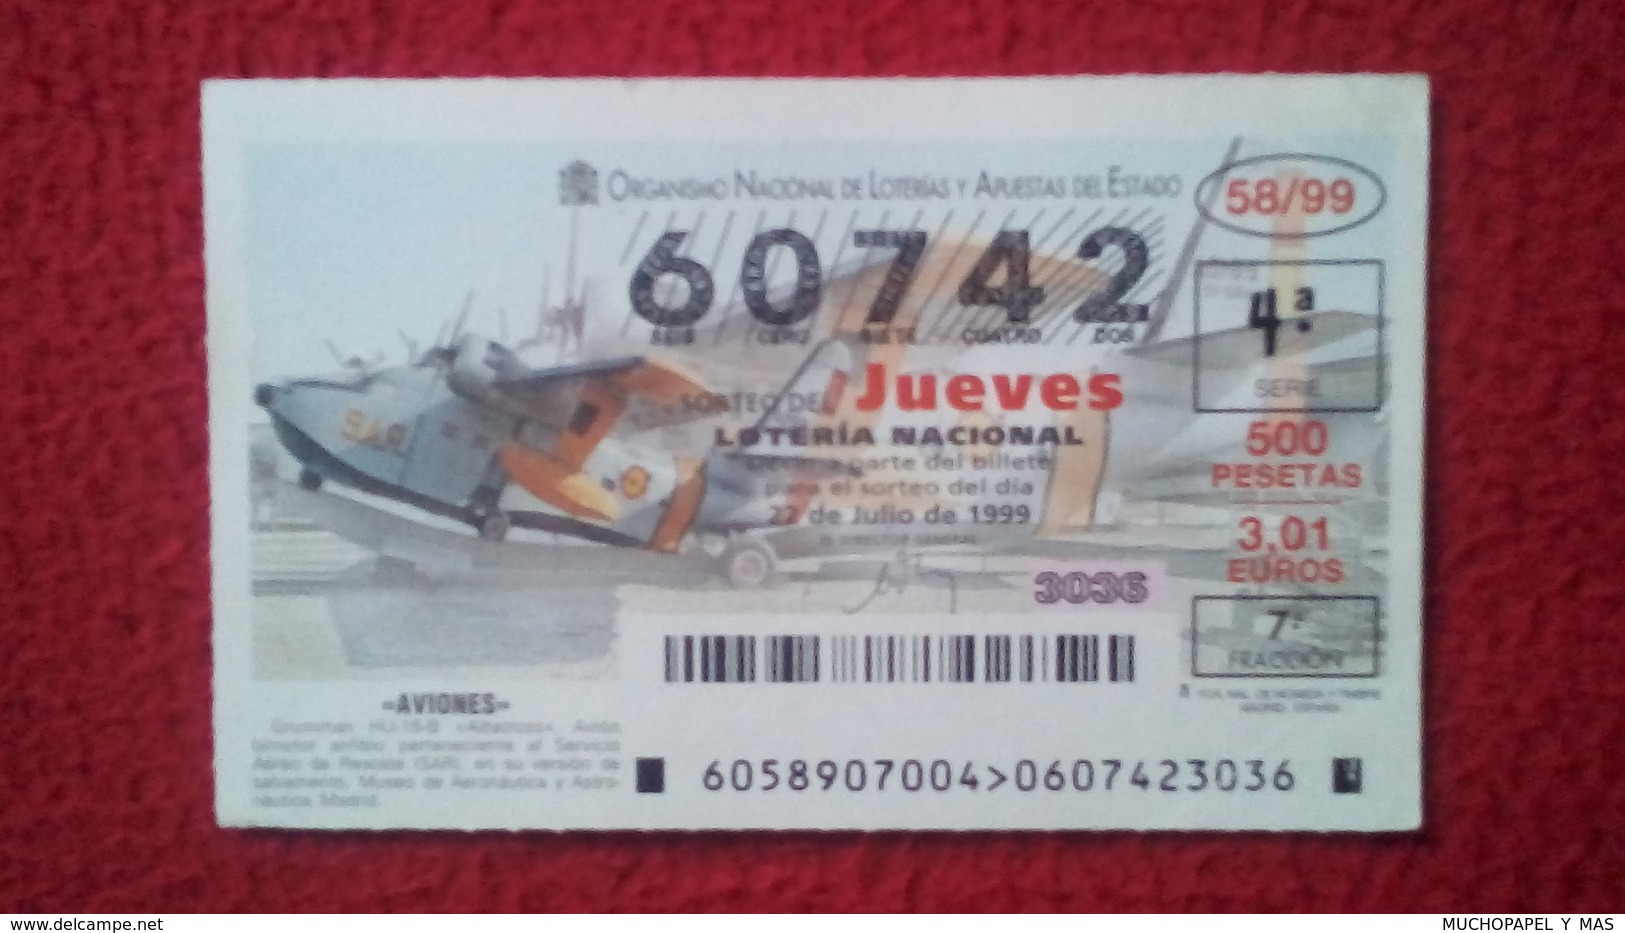 SPAIN DÉCIMO DE LOTERÍA LOTTERY LOTERIE AVIÓN AVIONES AIR PLANE AIRPLANE AVIACIÓN AVIATION GRUMMAN ALBATROSS HU-16-B VER - Billetes De Lotería